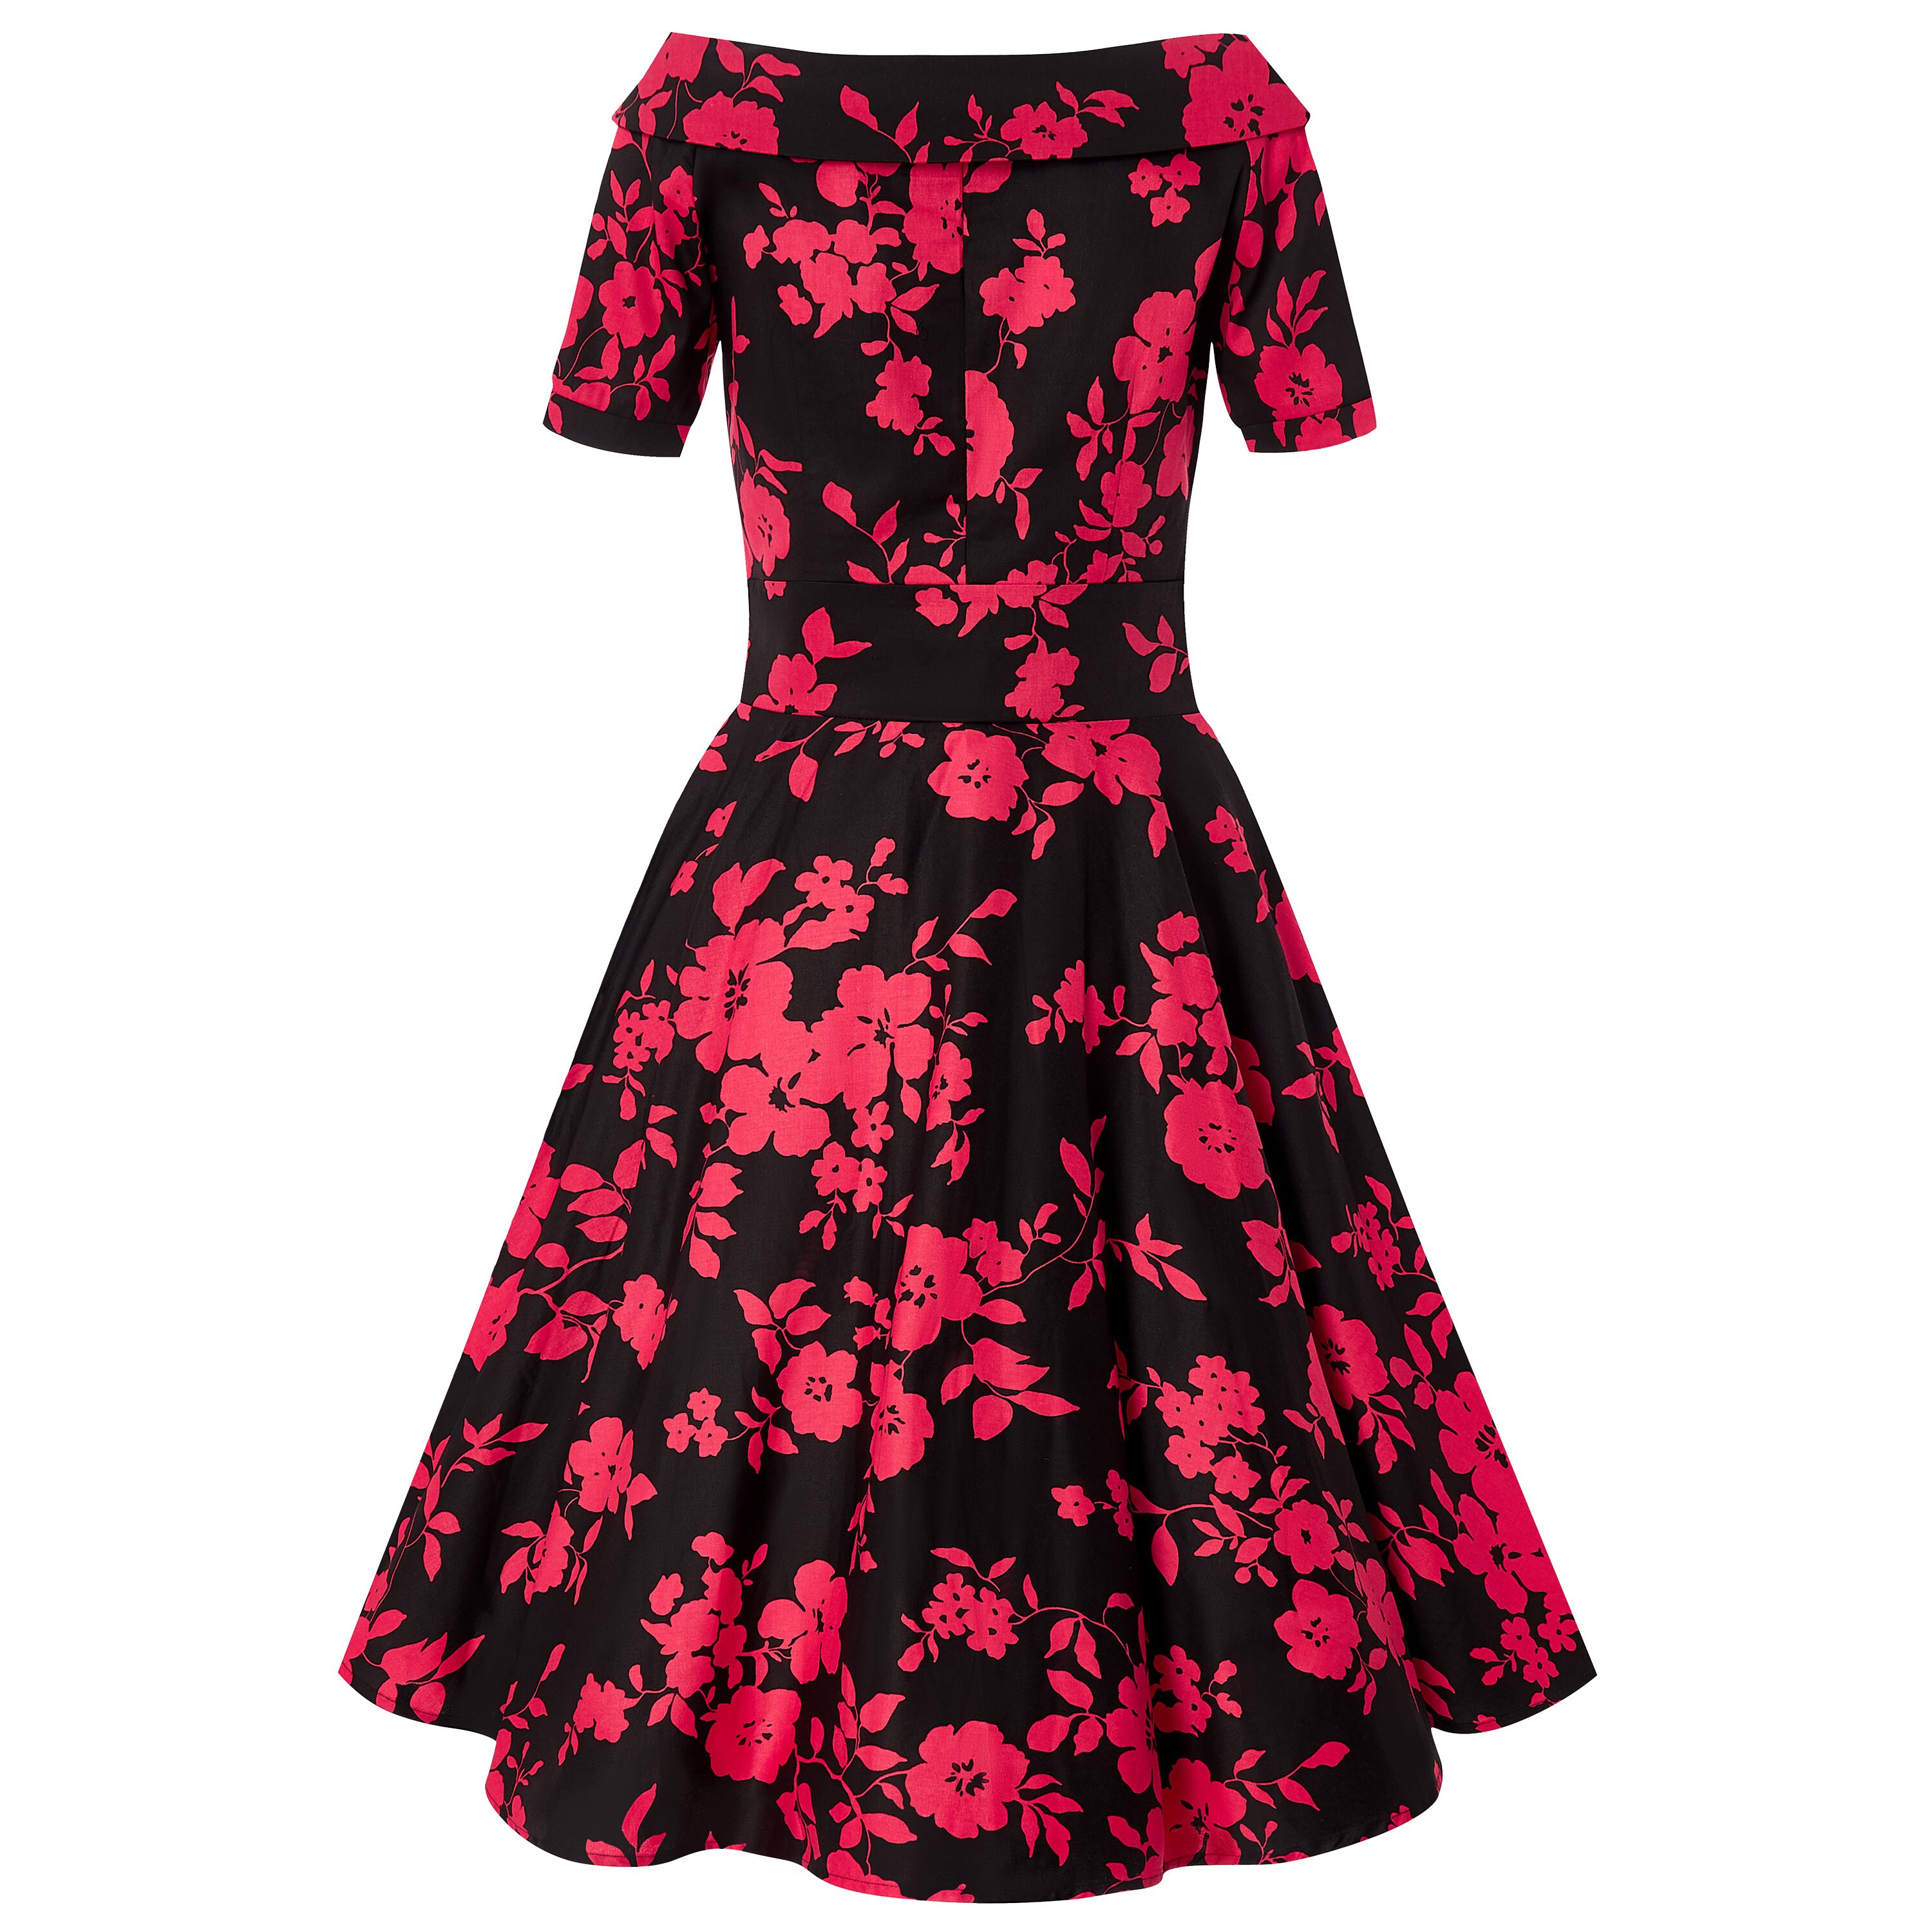 Darlene Retro Floral Swing Dress in Black/red - Etsy UK